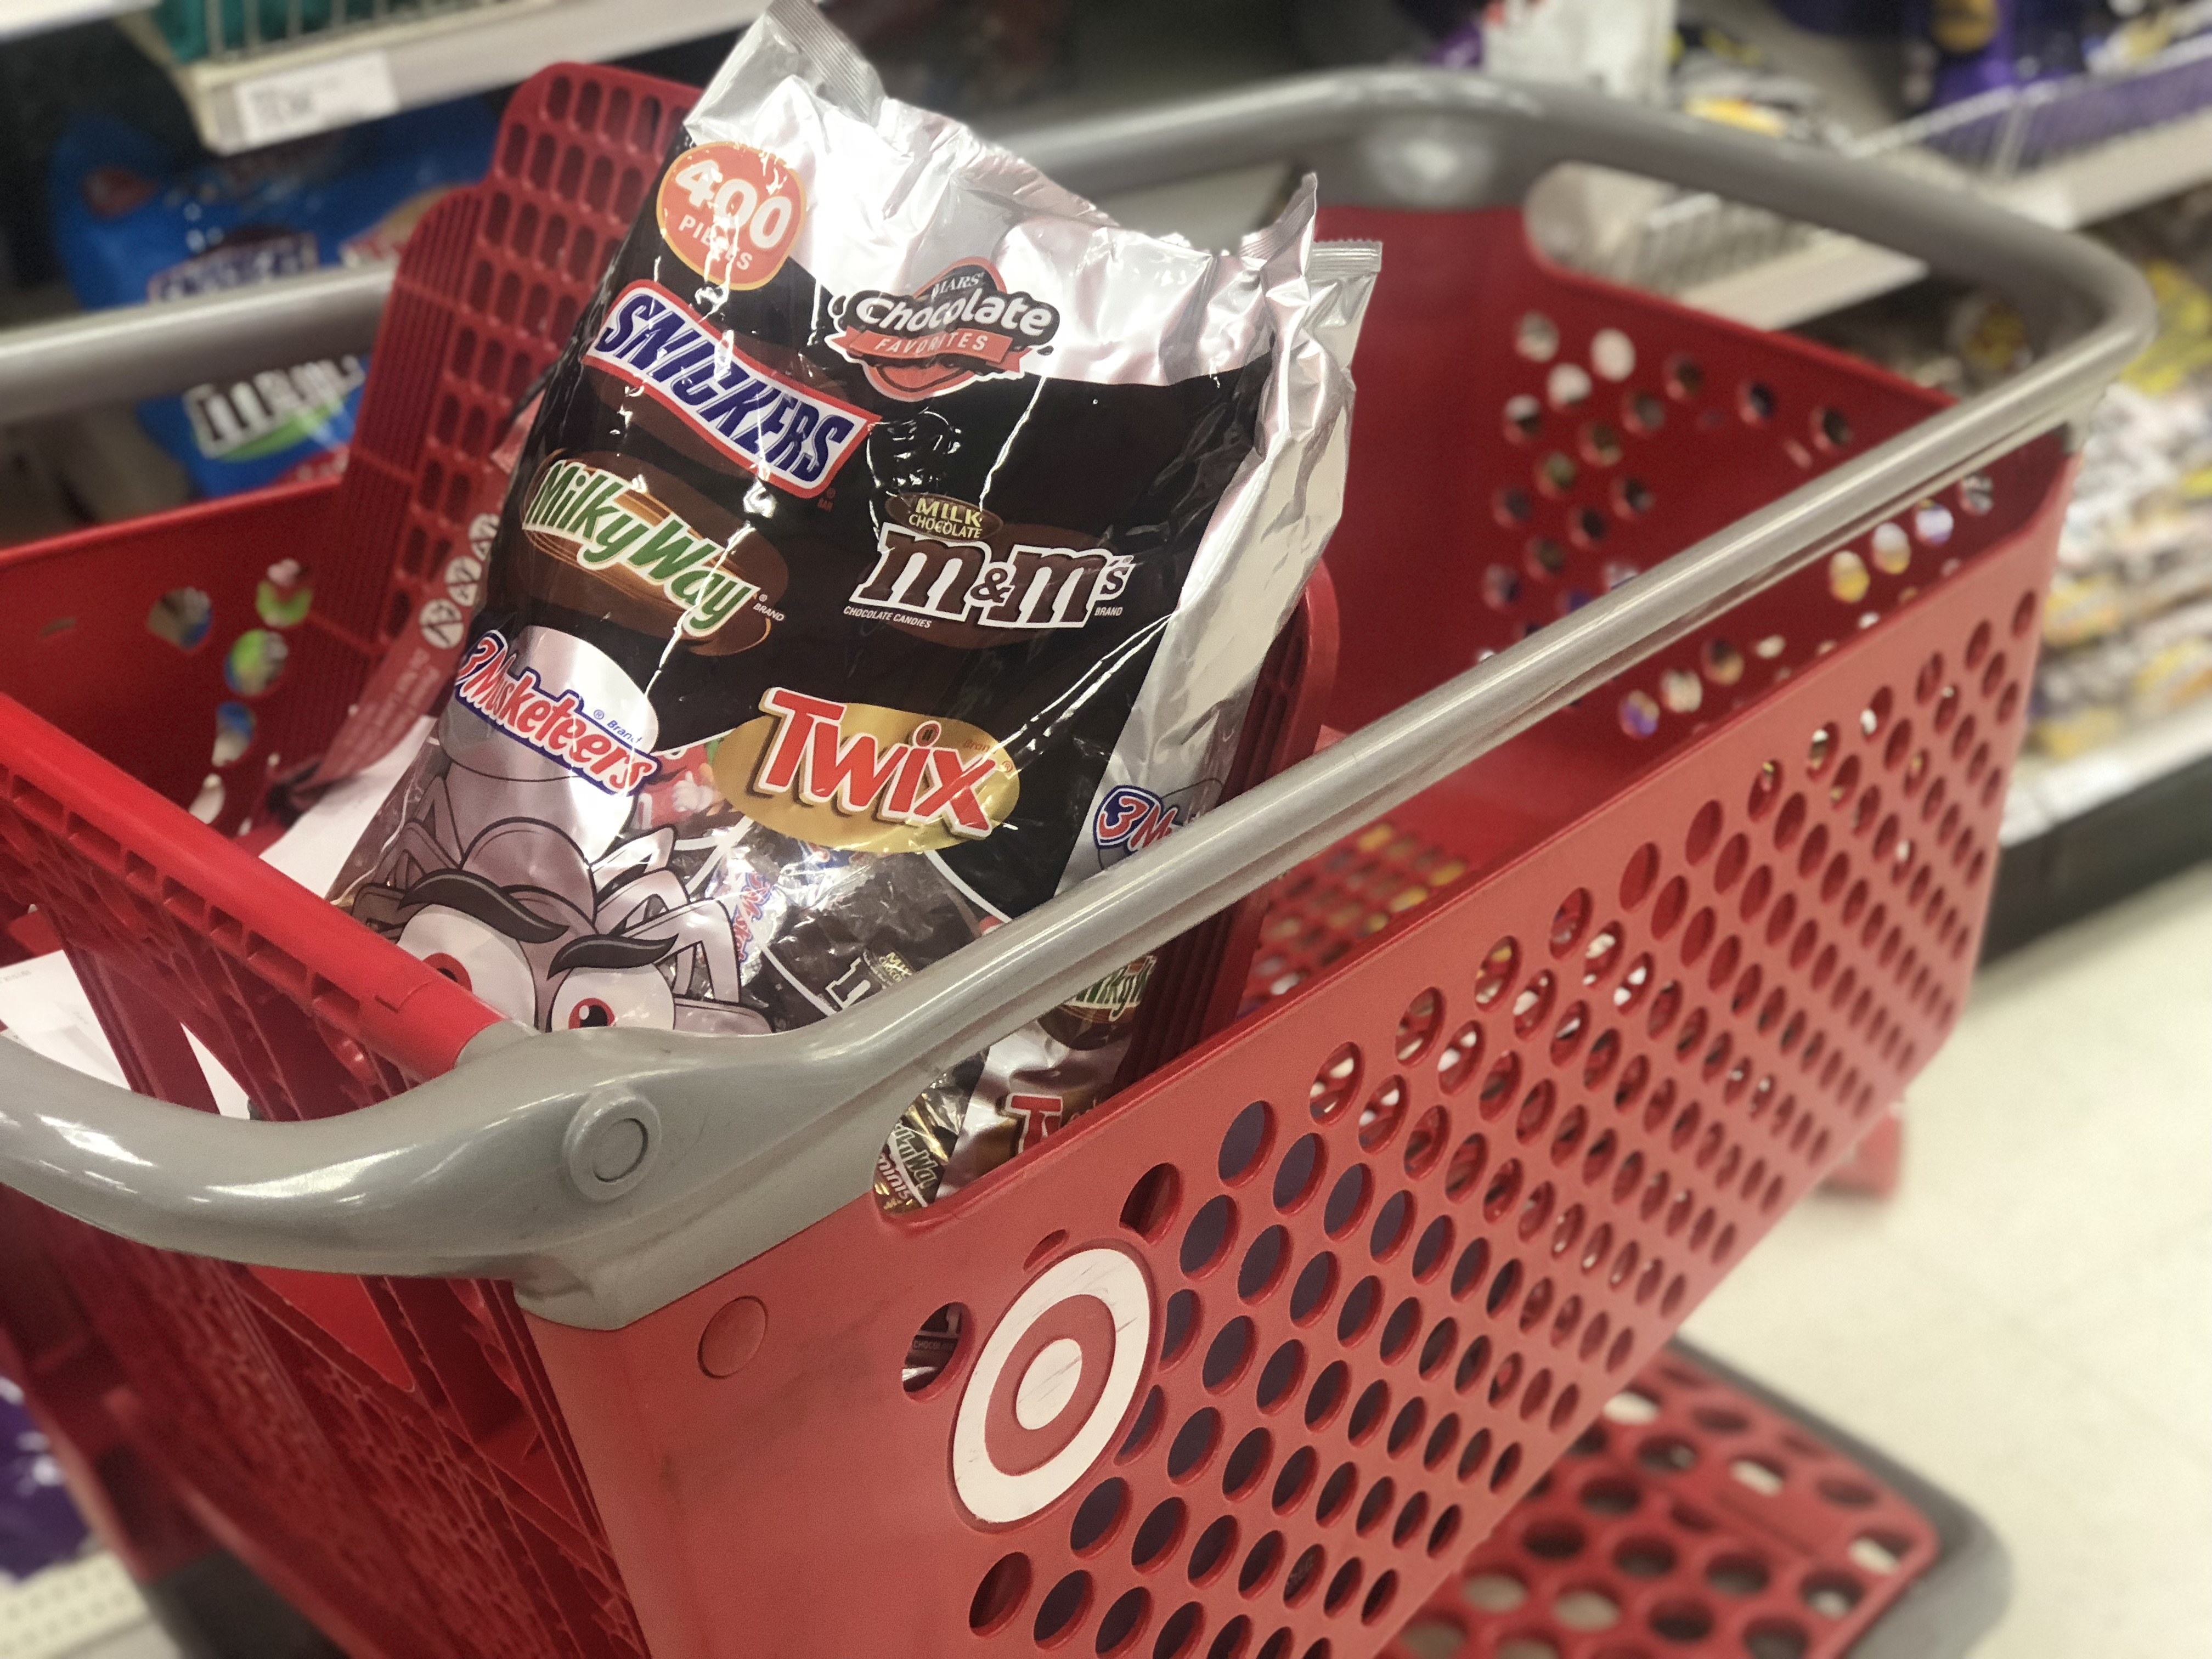 target & walgreens deals, coupons, & freebies 10-17-2018 – Mars Halloween candy at Target